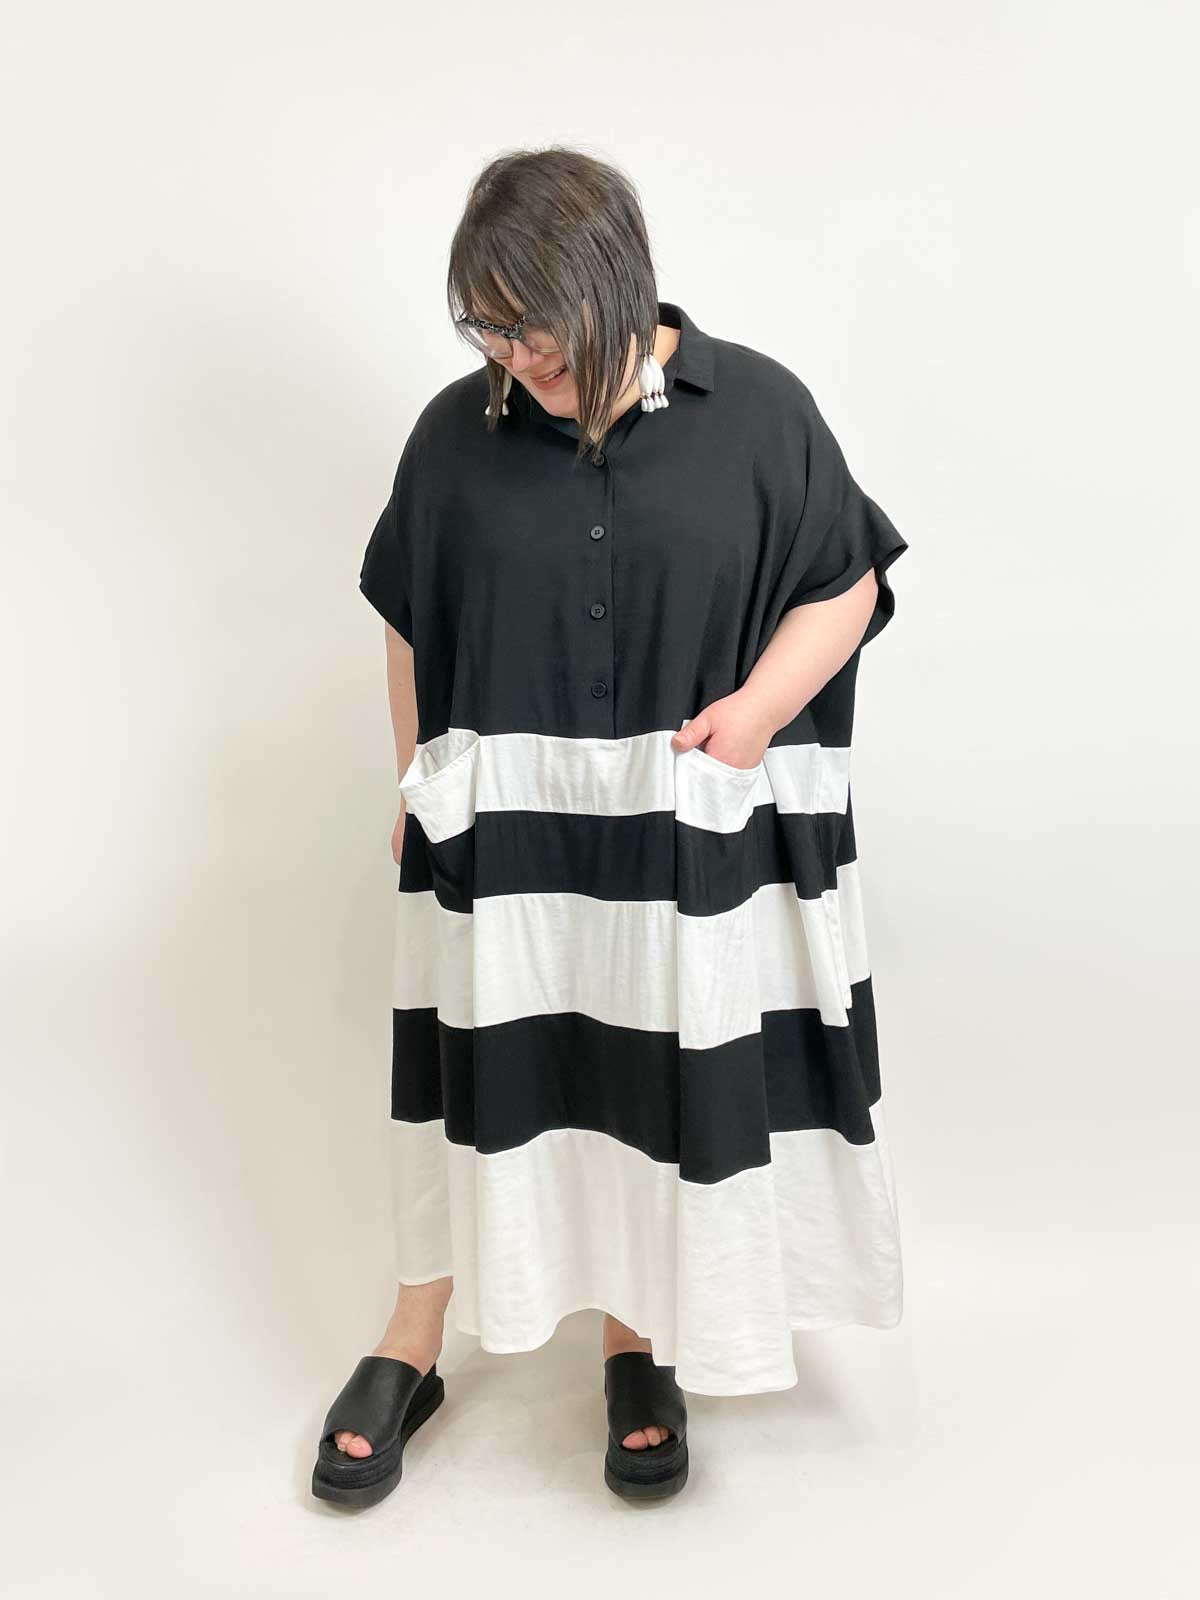 Kedem Sasson Fern Dress, Black/White - Statement Boutique